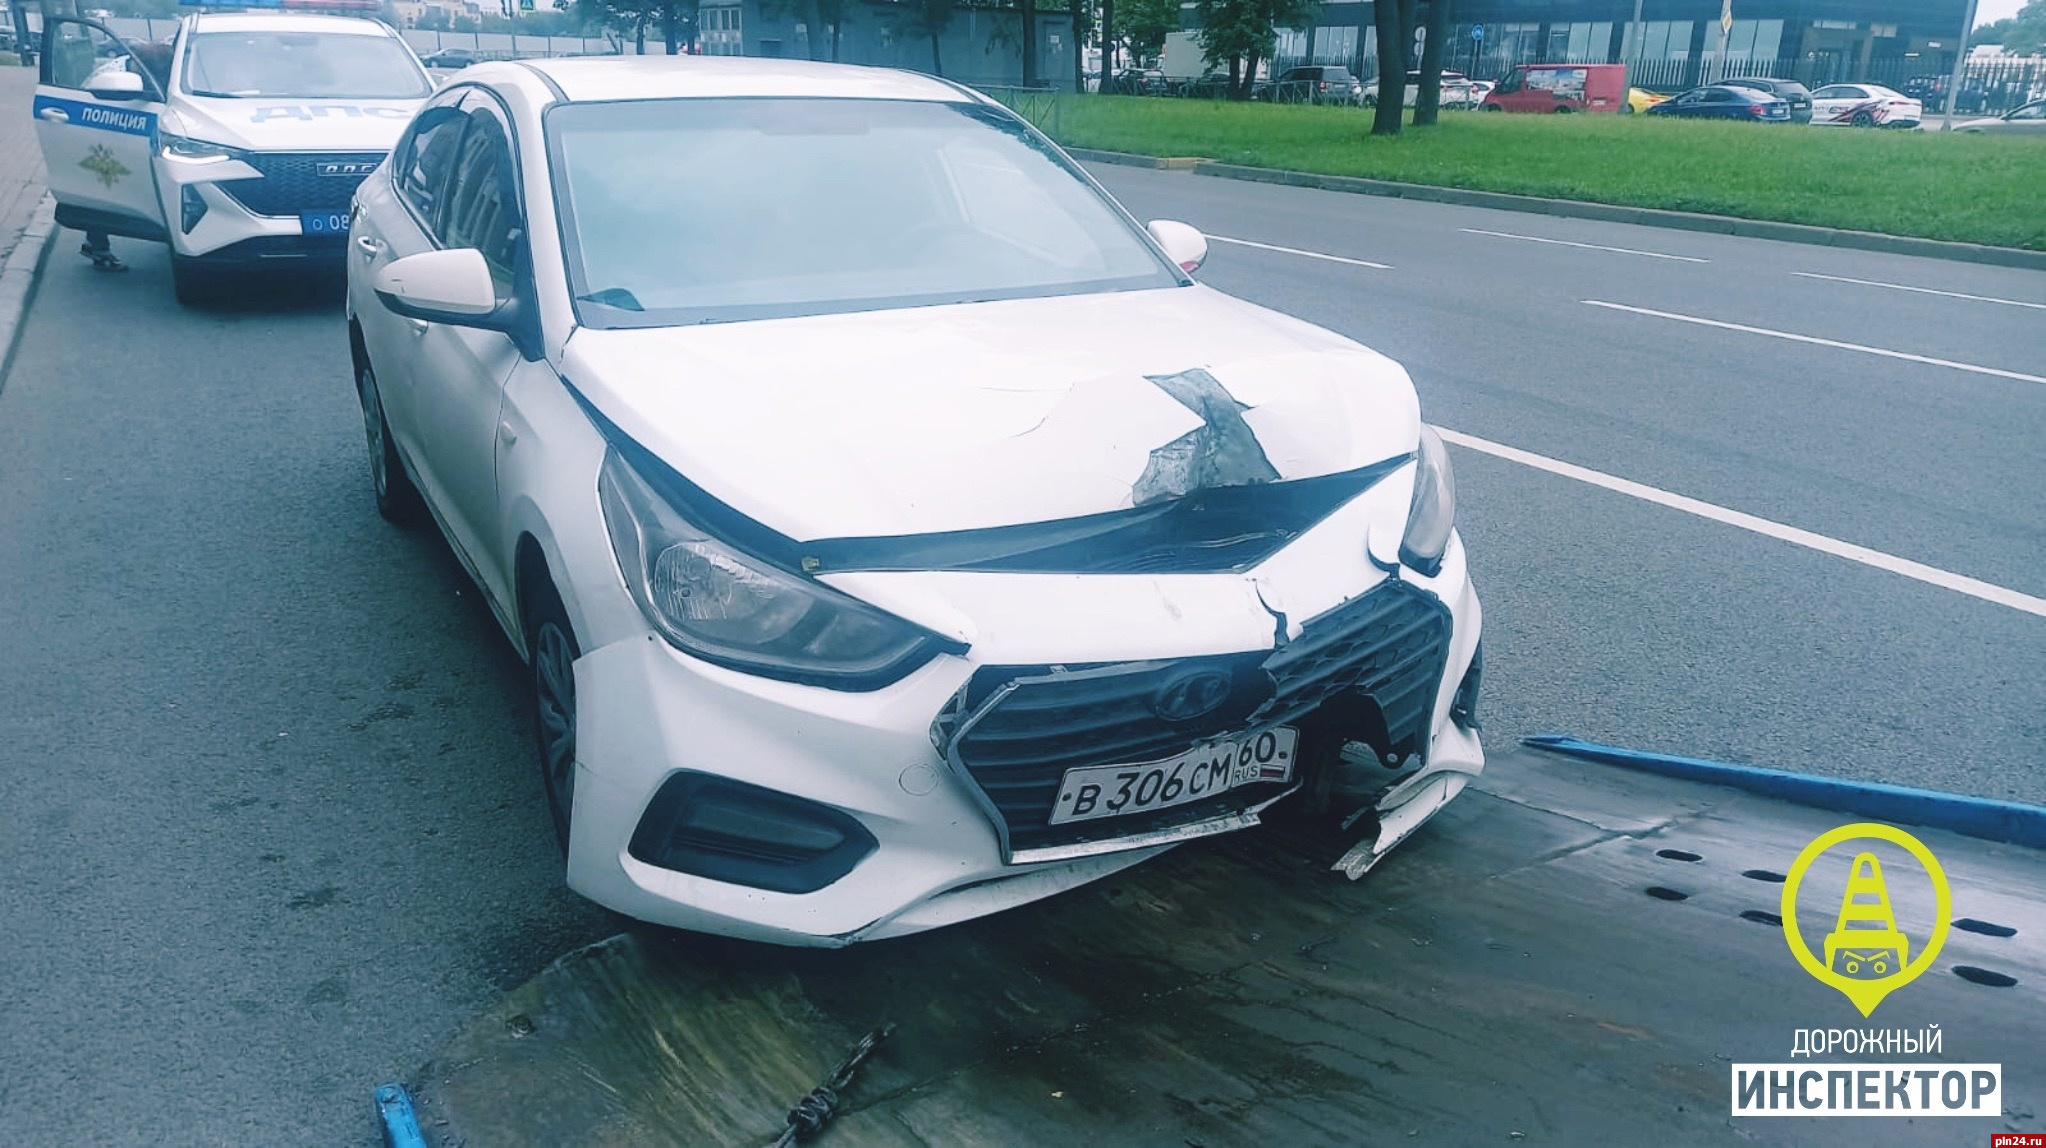 Иностранца на автомобиле с псковскими номерами со стрельбой ловили на пути из центра Петербурга